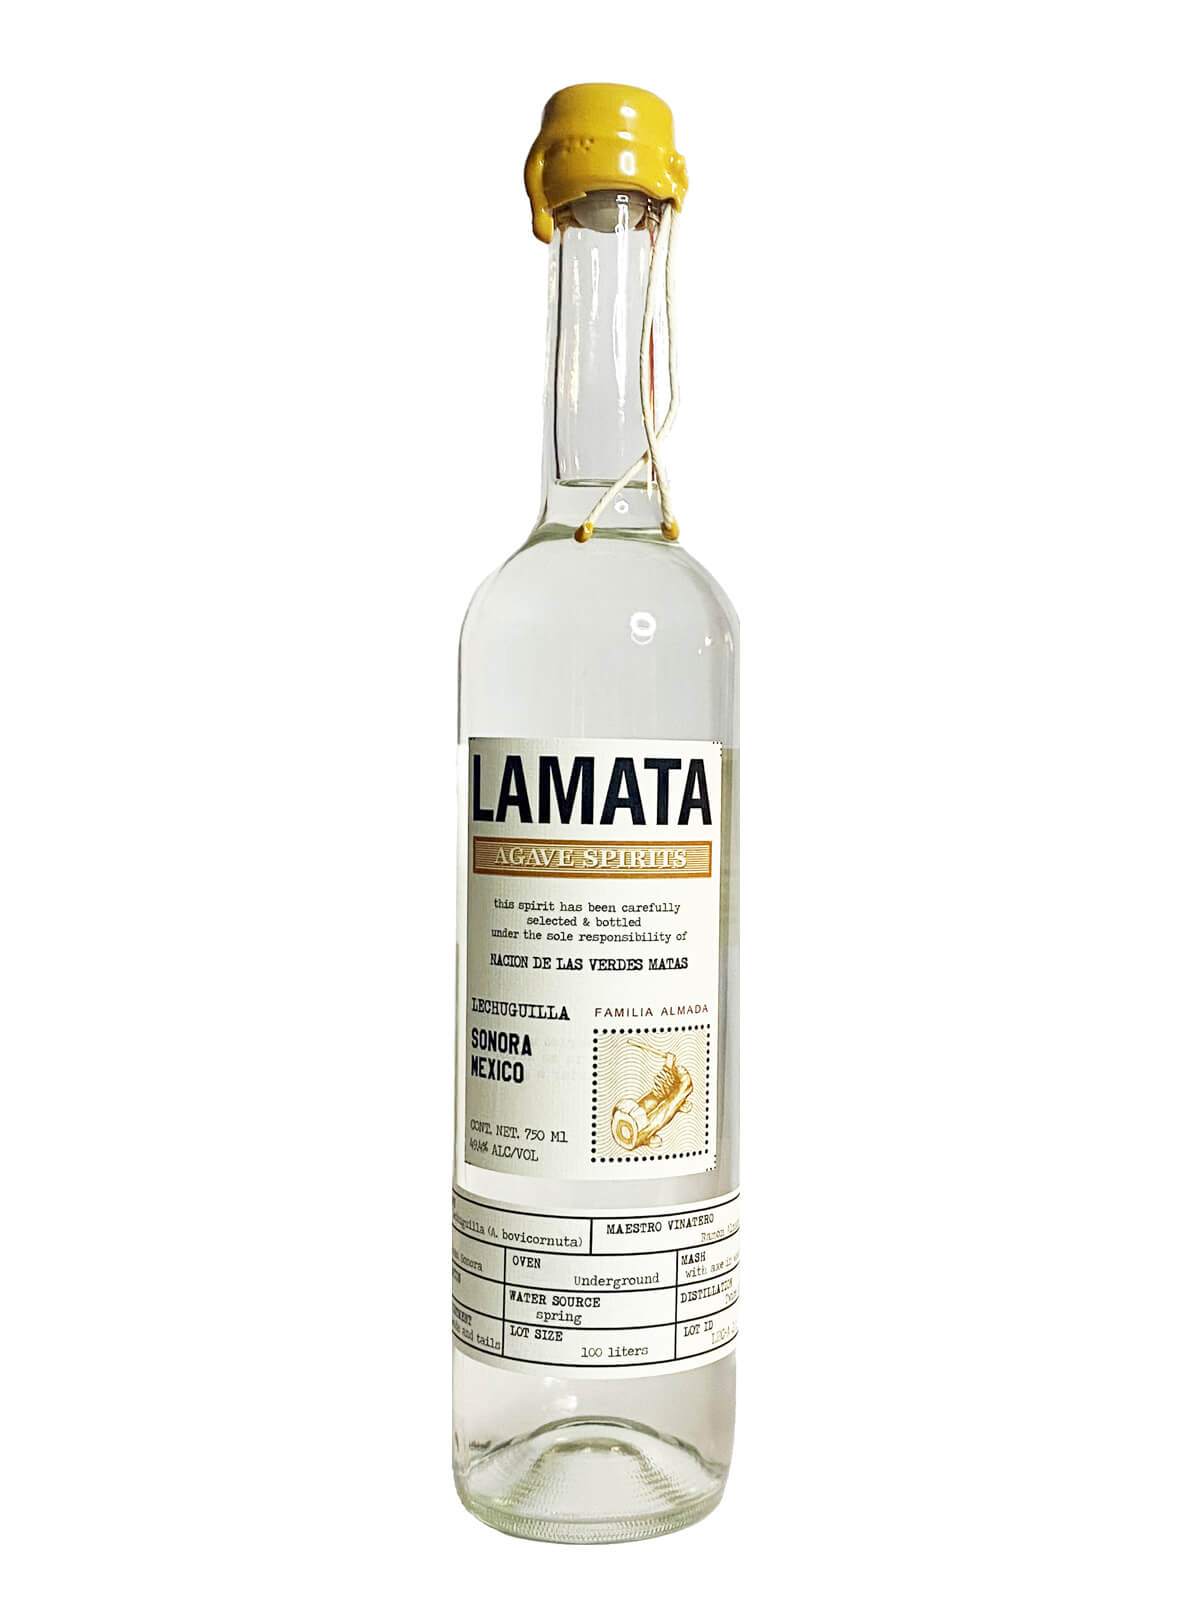 Lamata Lechuguilla Sonora bottle